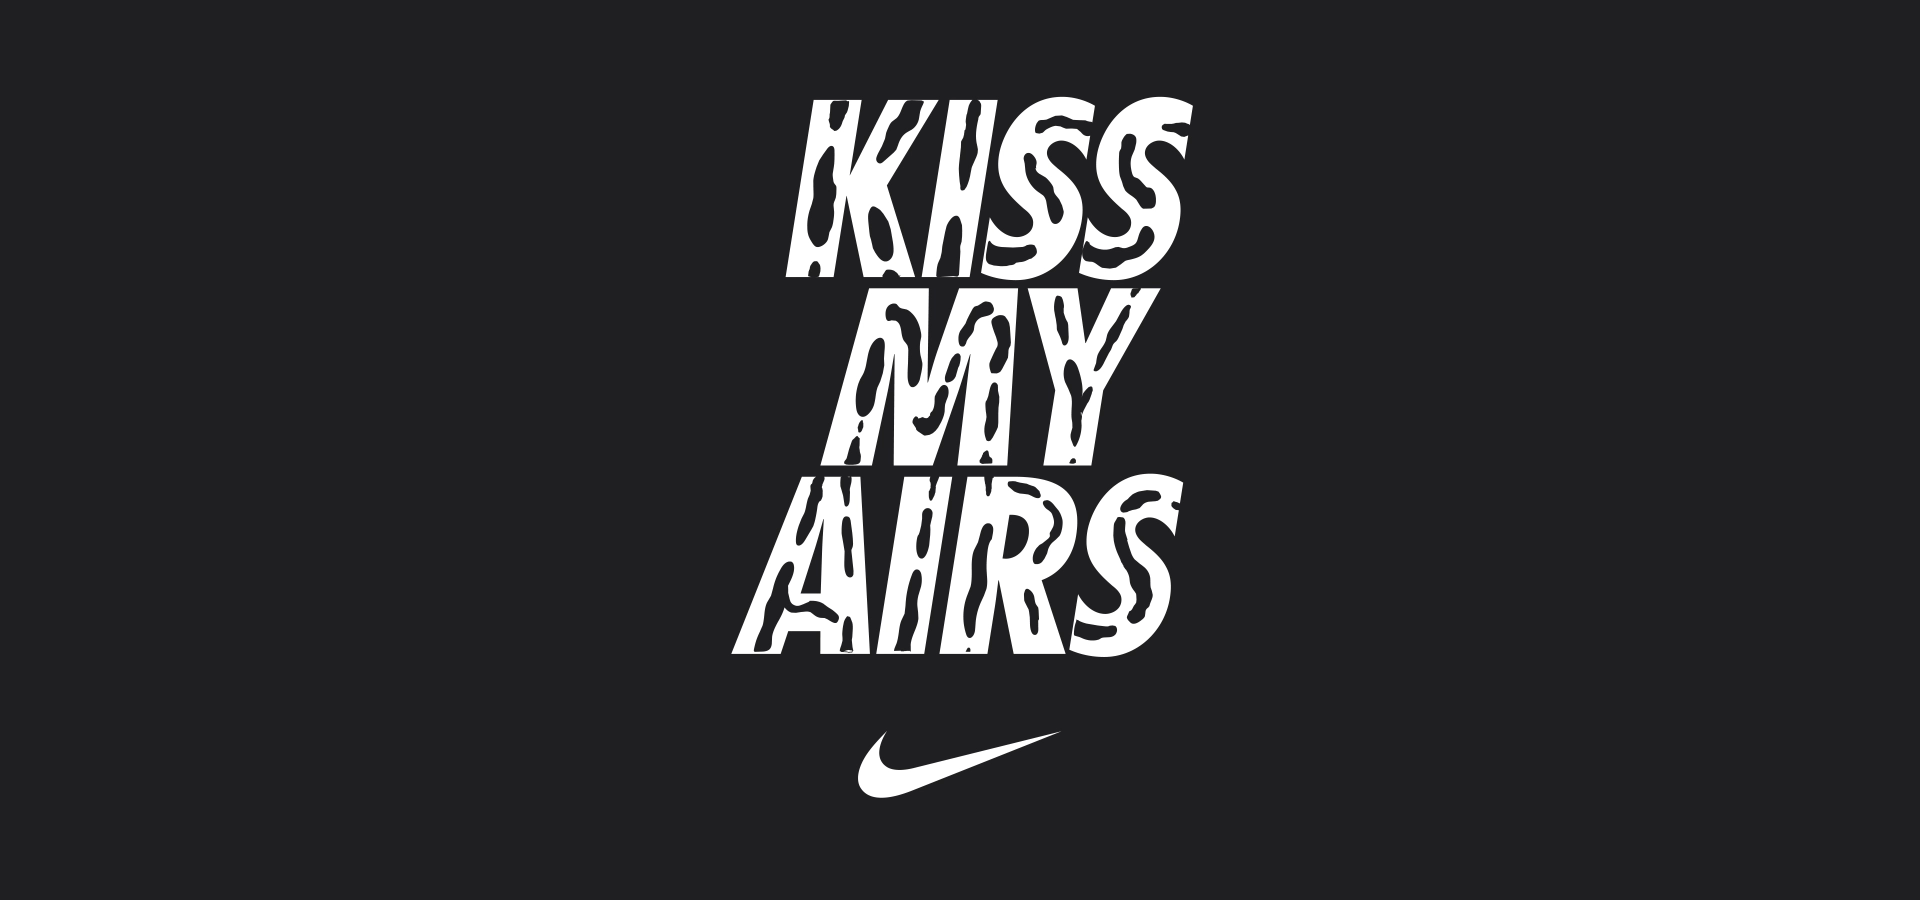 Niike Vapor Max Logo - Nike: Vapormax Day. Kiss My Airs. Winston Duke. Motion & Photography